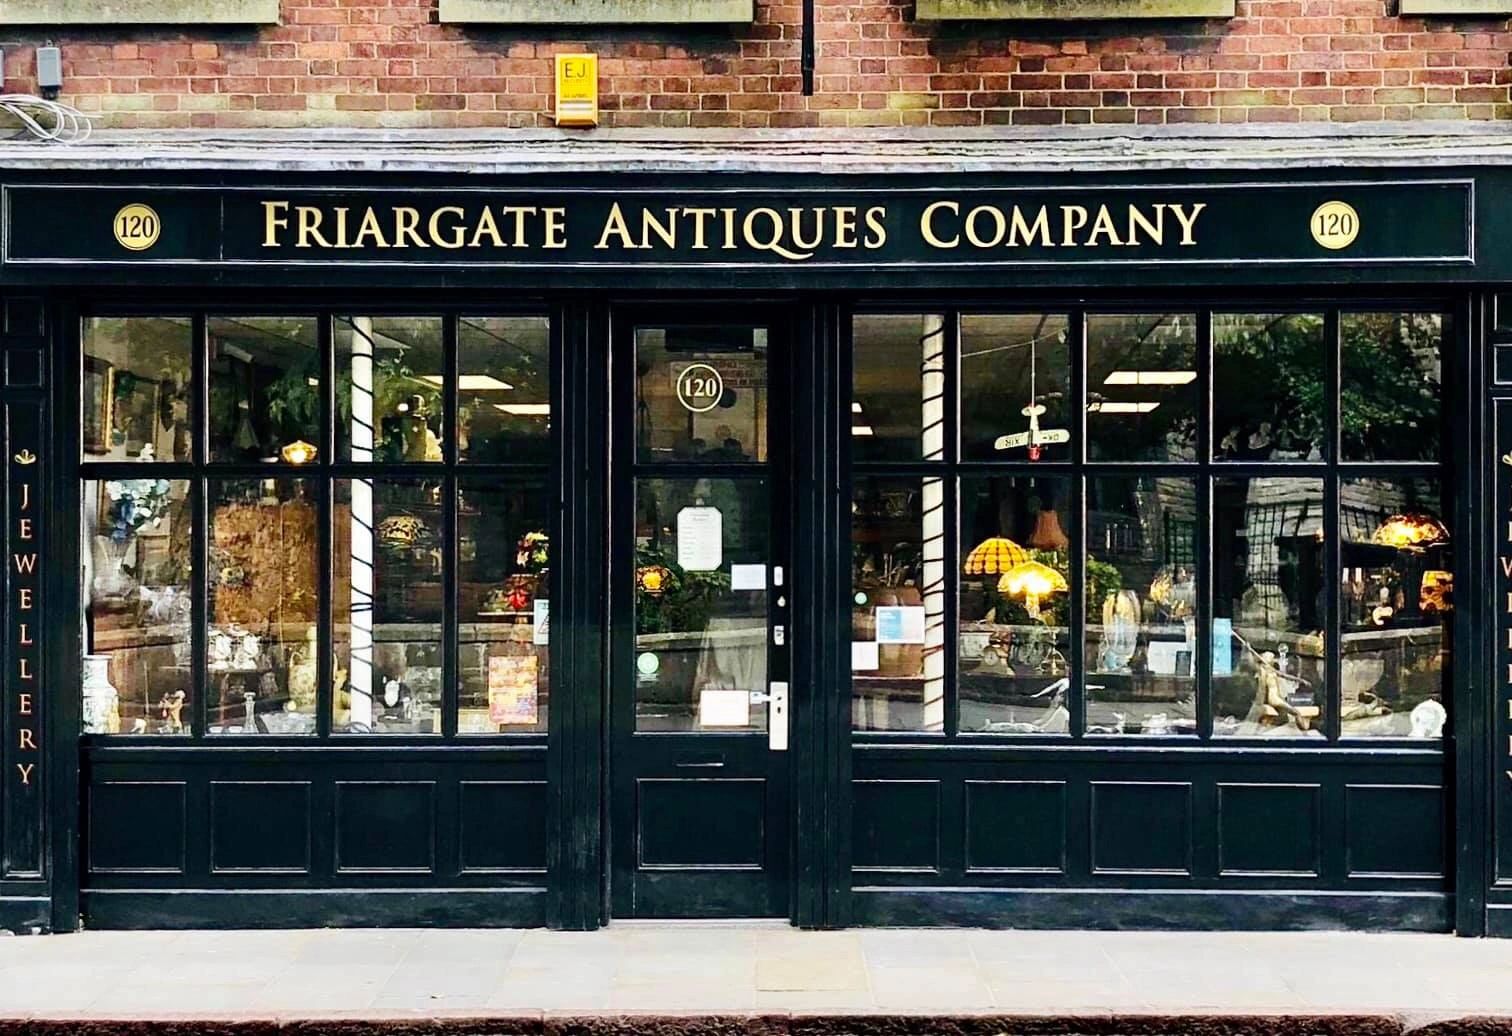 Friargate Antiques Company